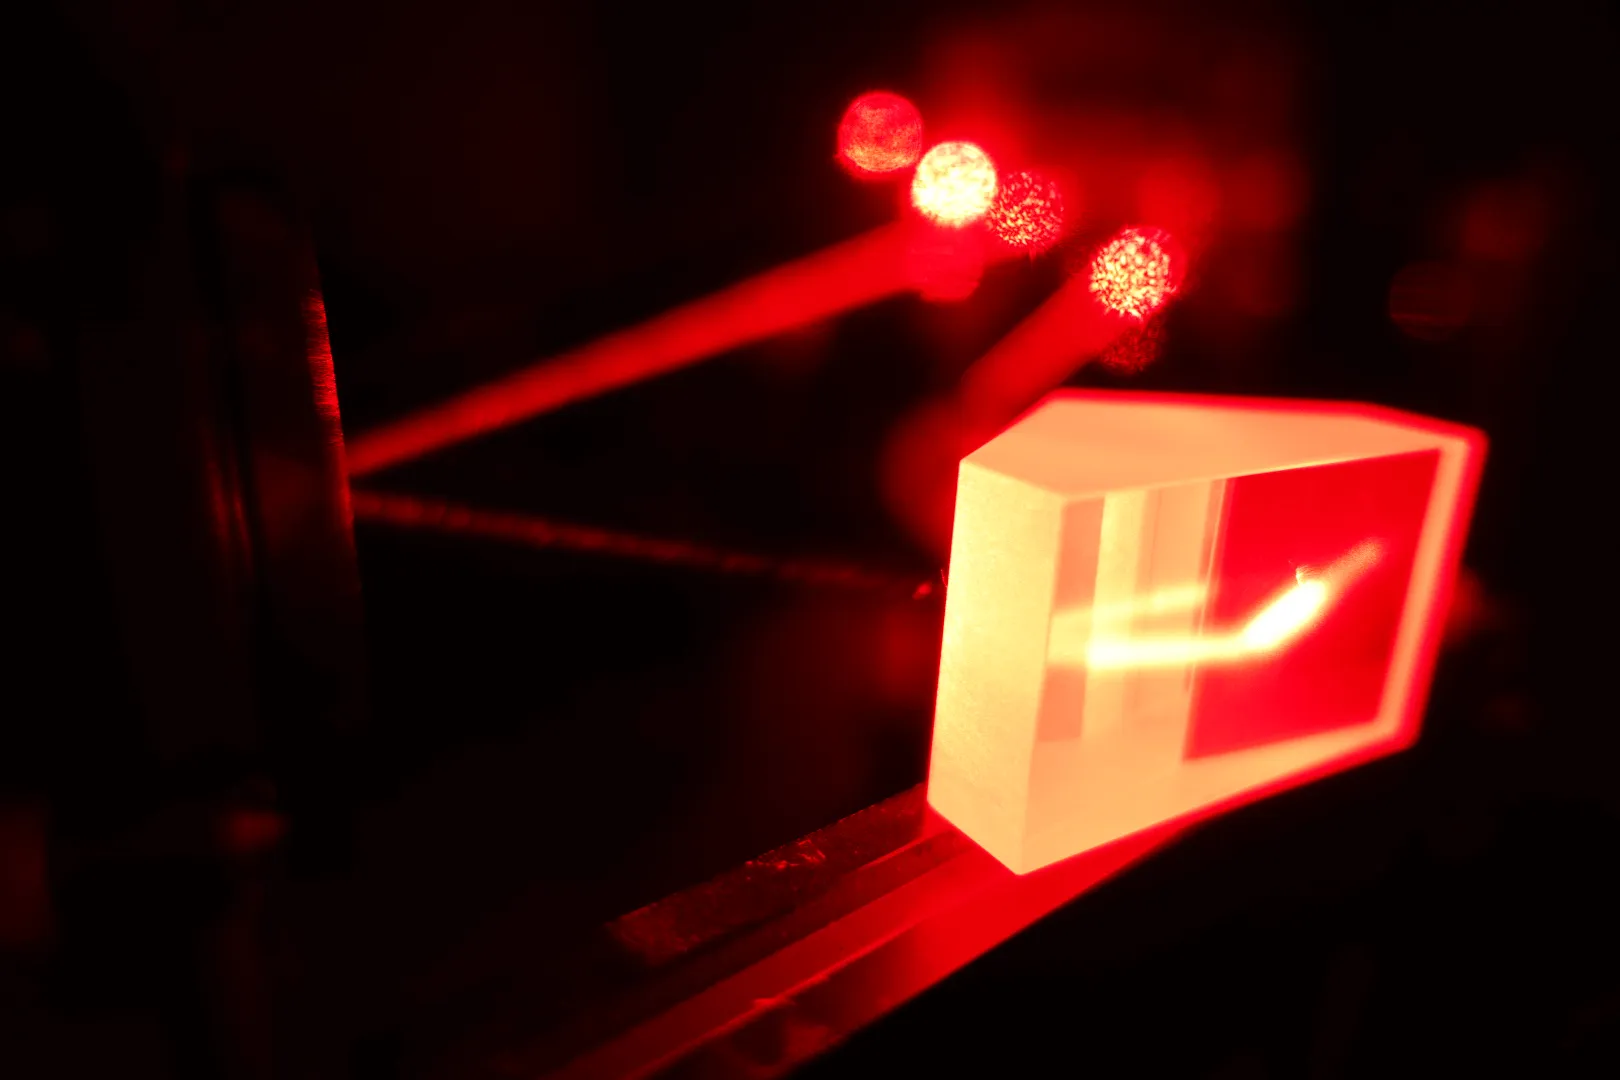 The Pressure of Laser Light